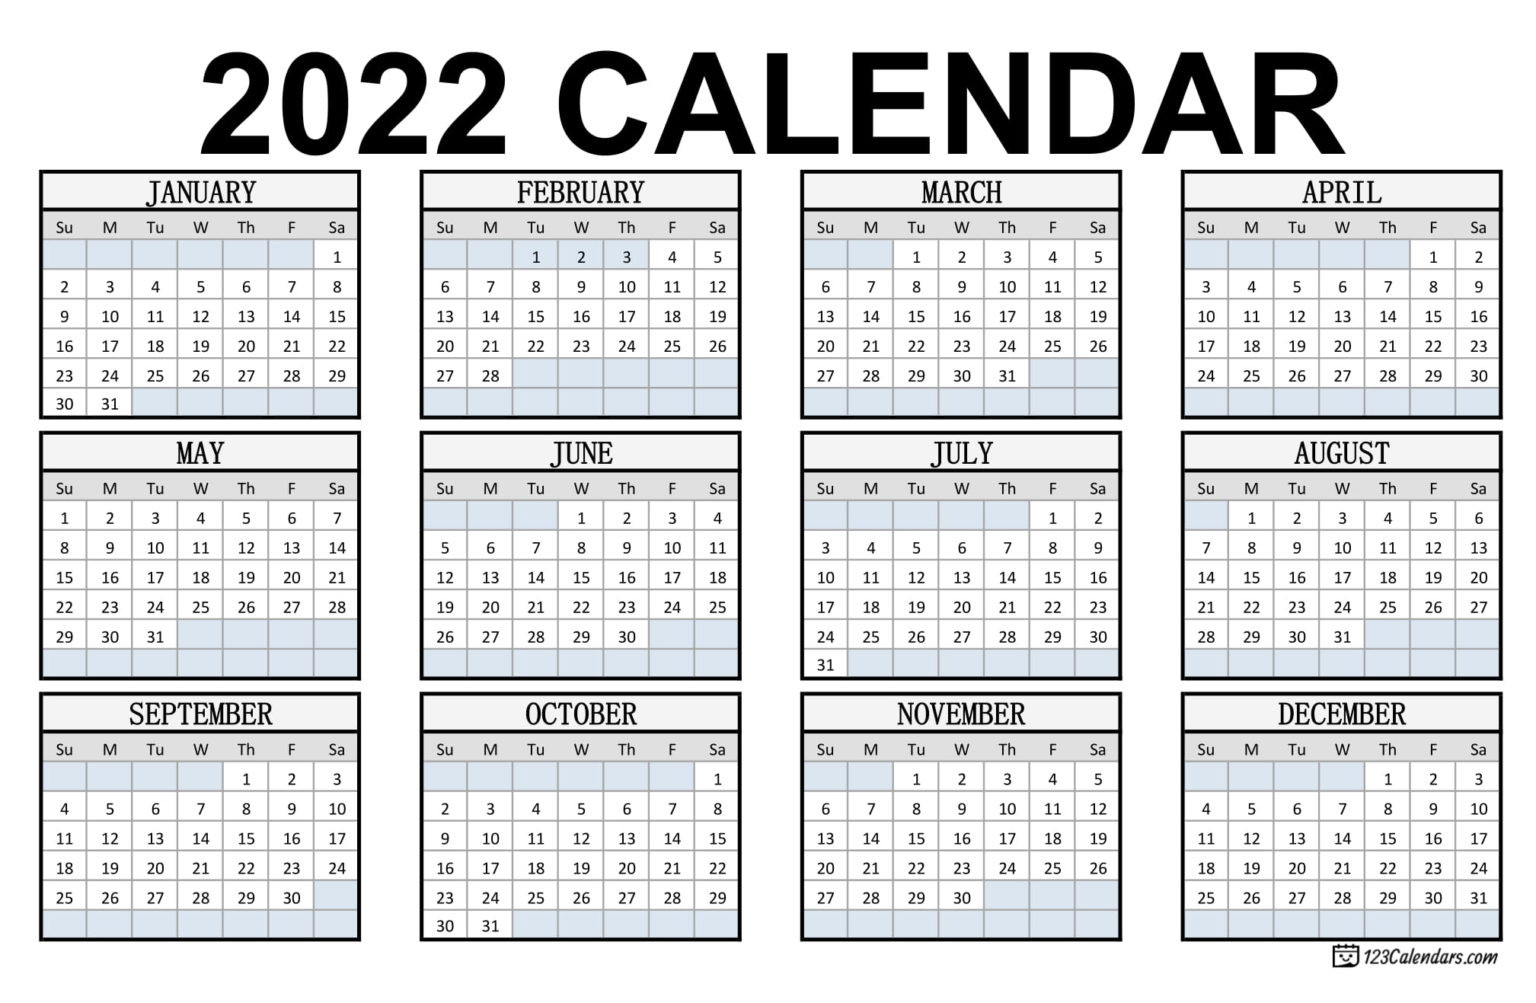 2022 Calendar Printable Pdf Imom - 2021 Printable Calendar  Imom 2022 Calendar Printable